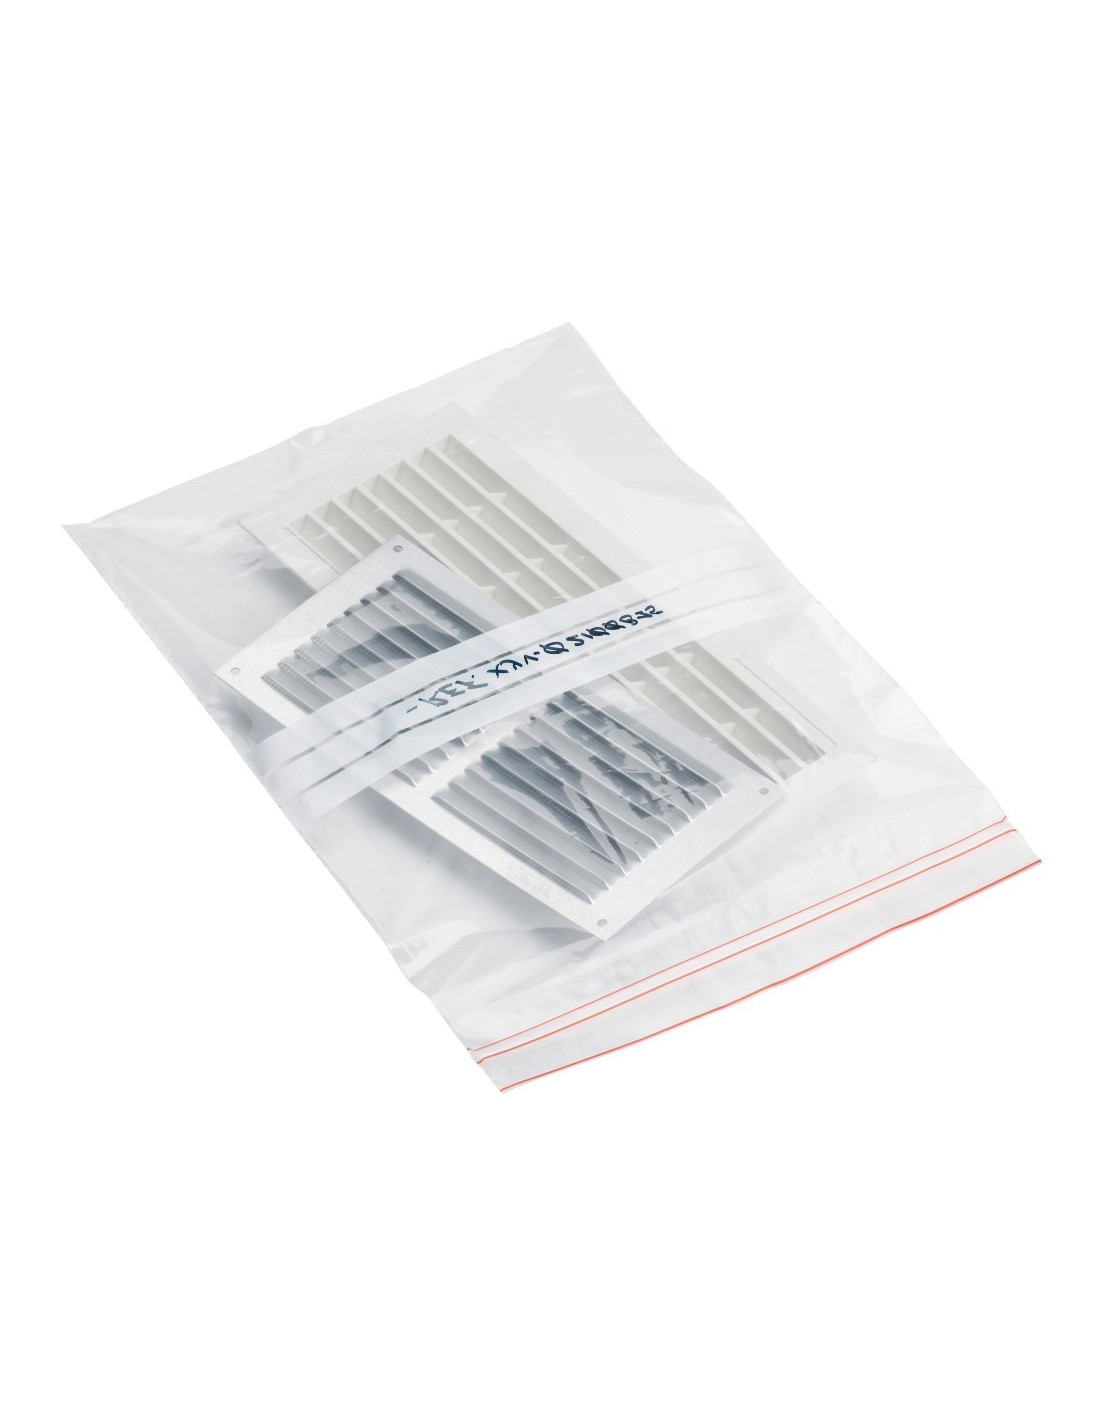 Sac plastique ZIP 120x180 mm - Sachet ZIP transparent 50µ en PEBD - Carton  de 1000 sacs